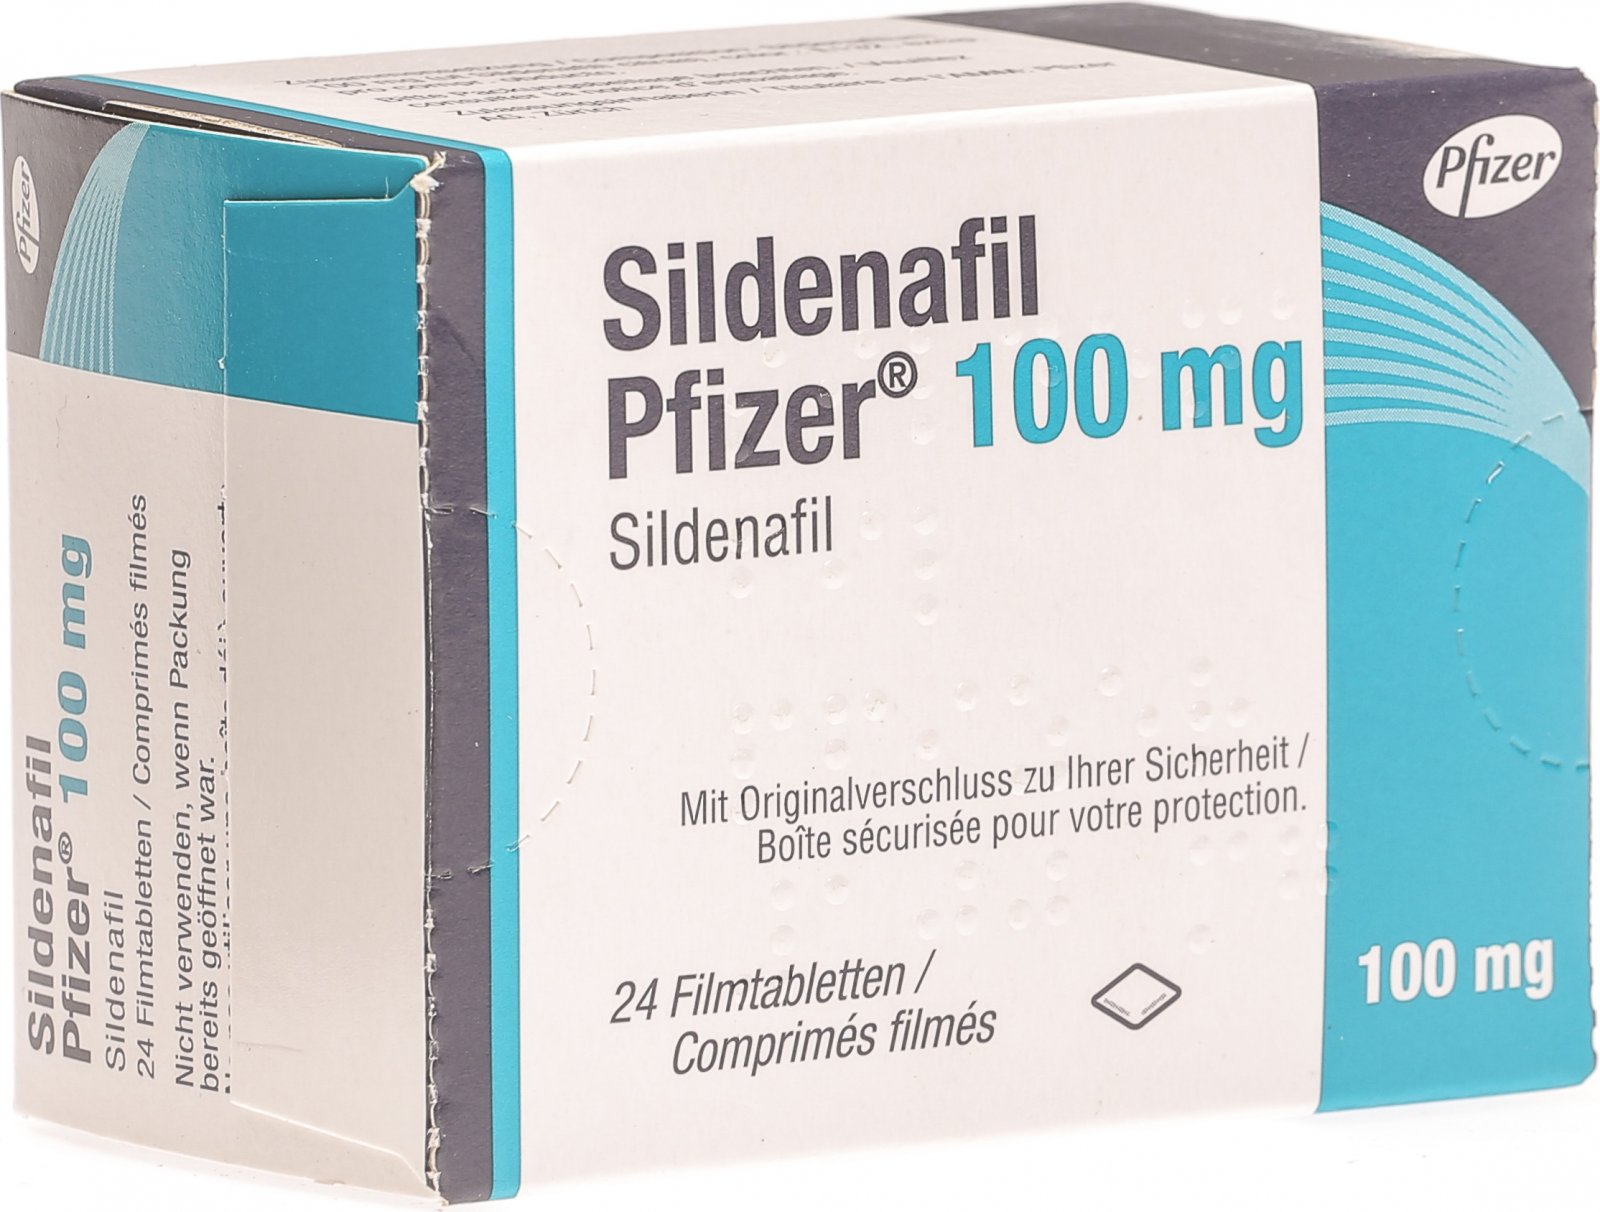 Sildenafil Pfizer Filmtabletten 100mg 24 Stück In Der Adler Apotheke